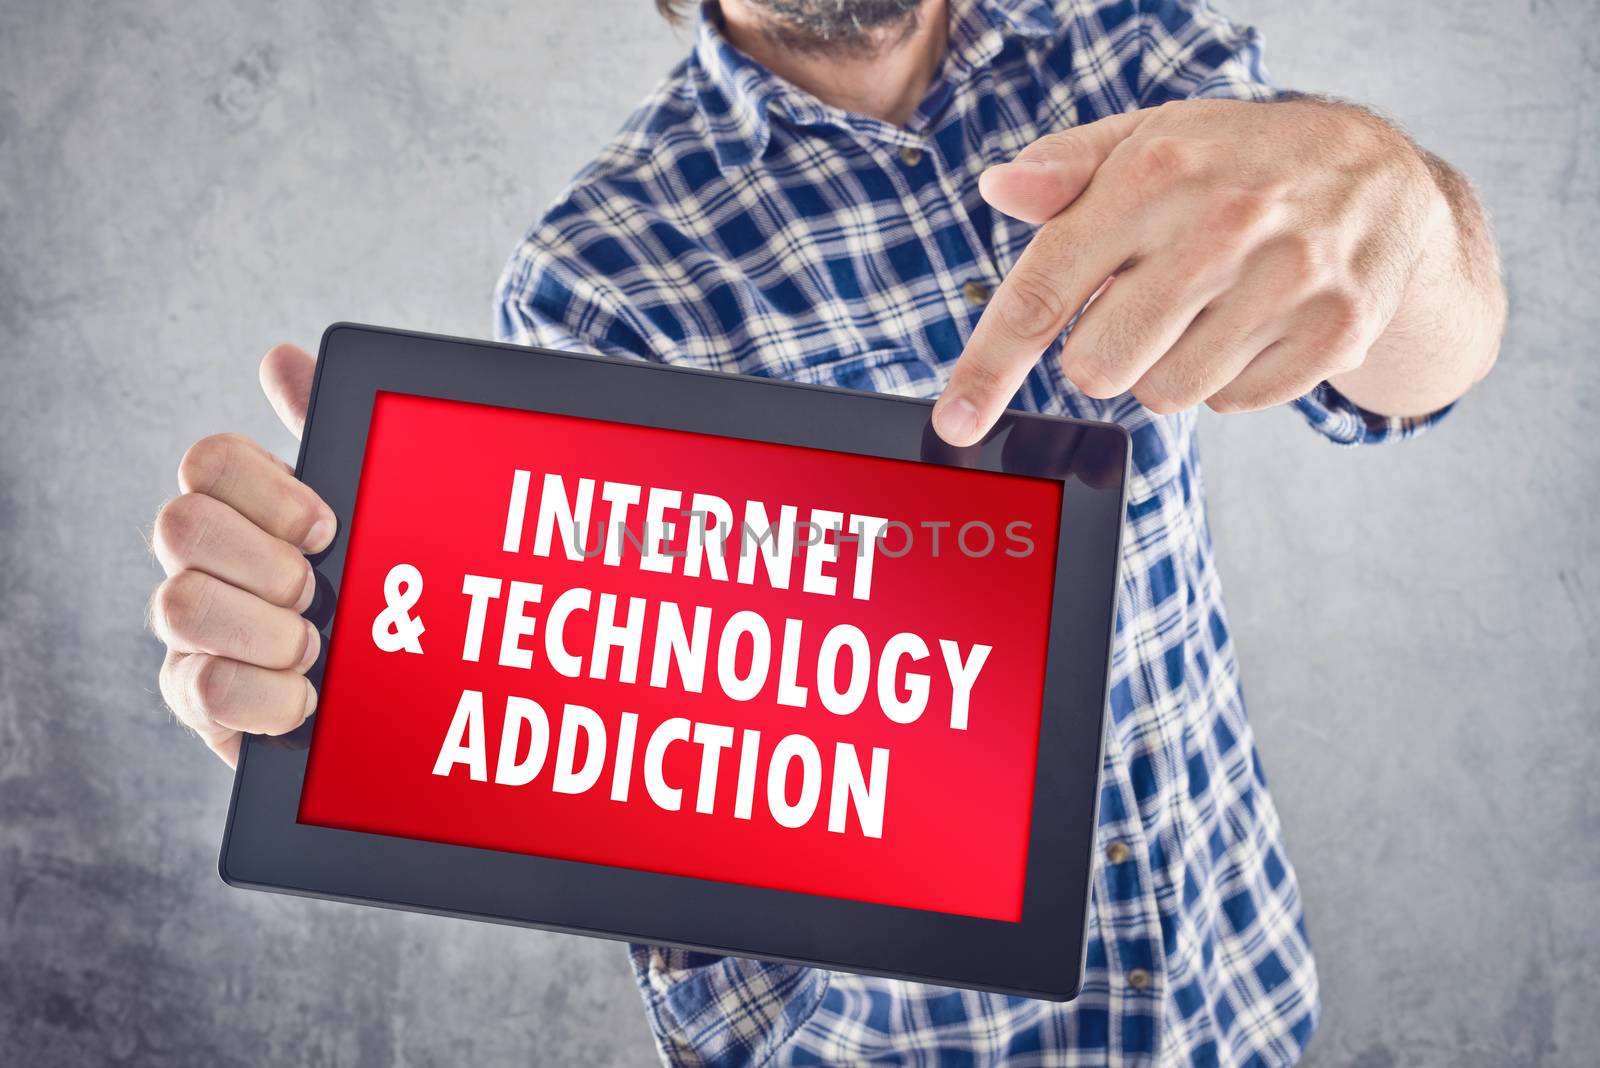 Internet And Technology Addiction by stevanovicigor